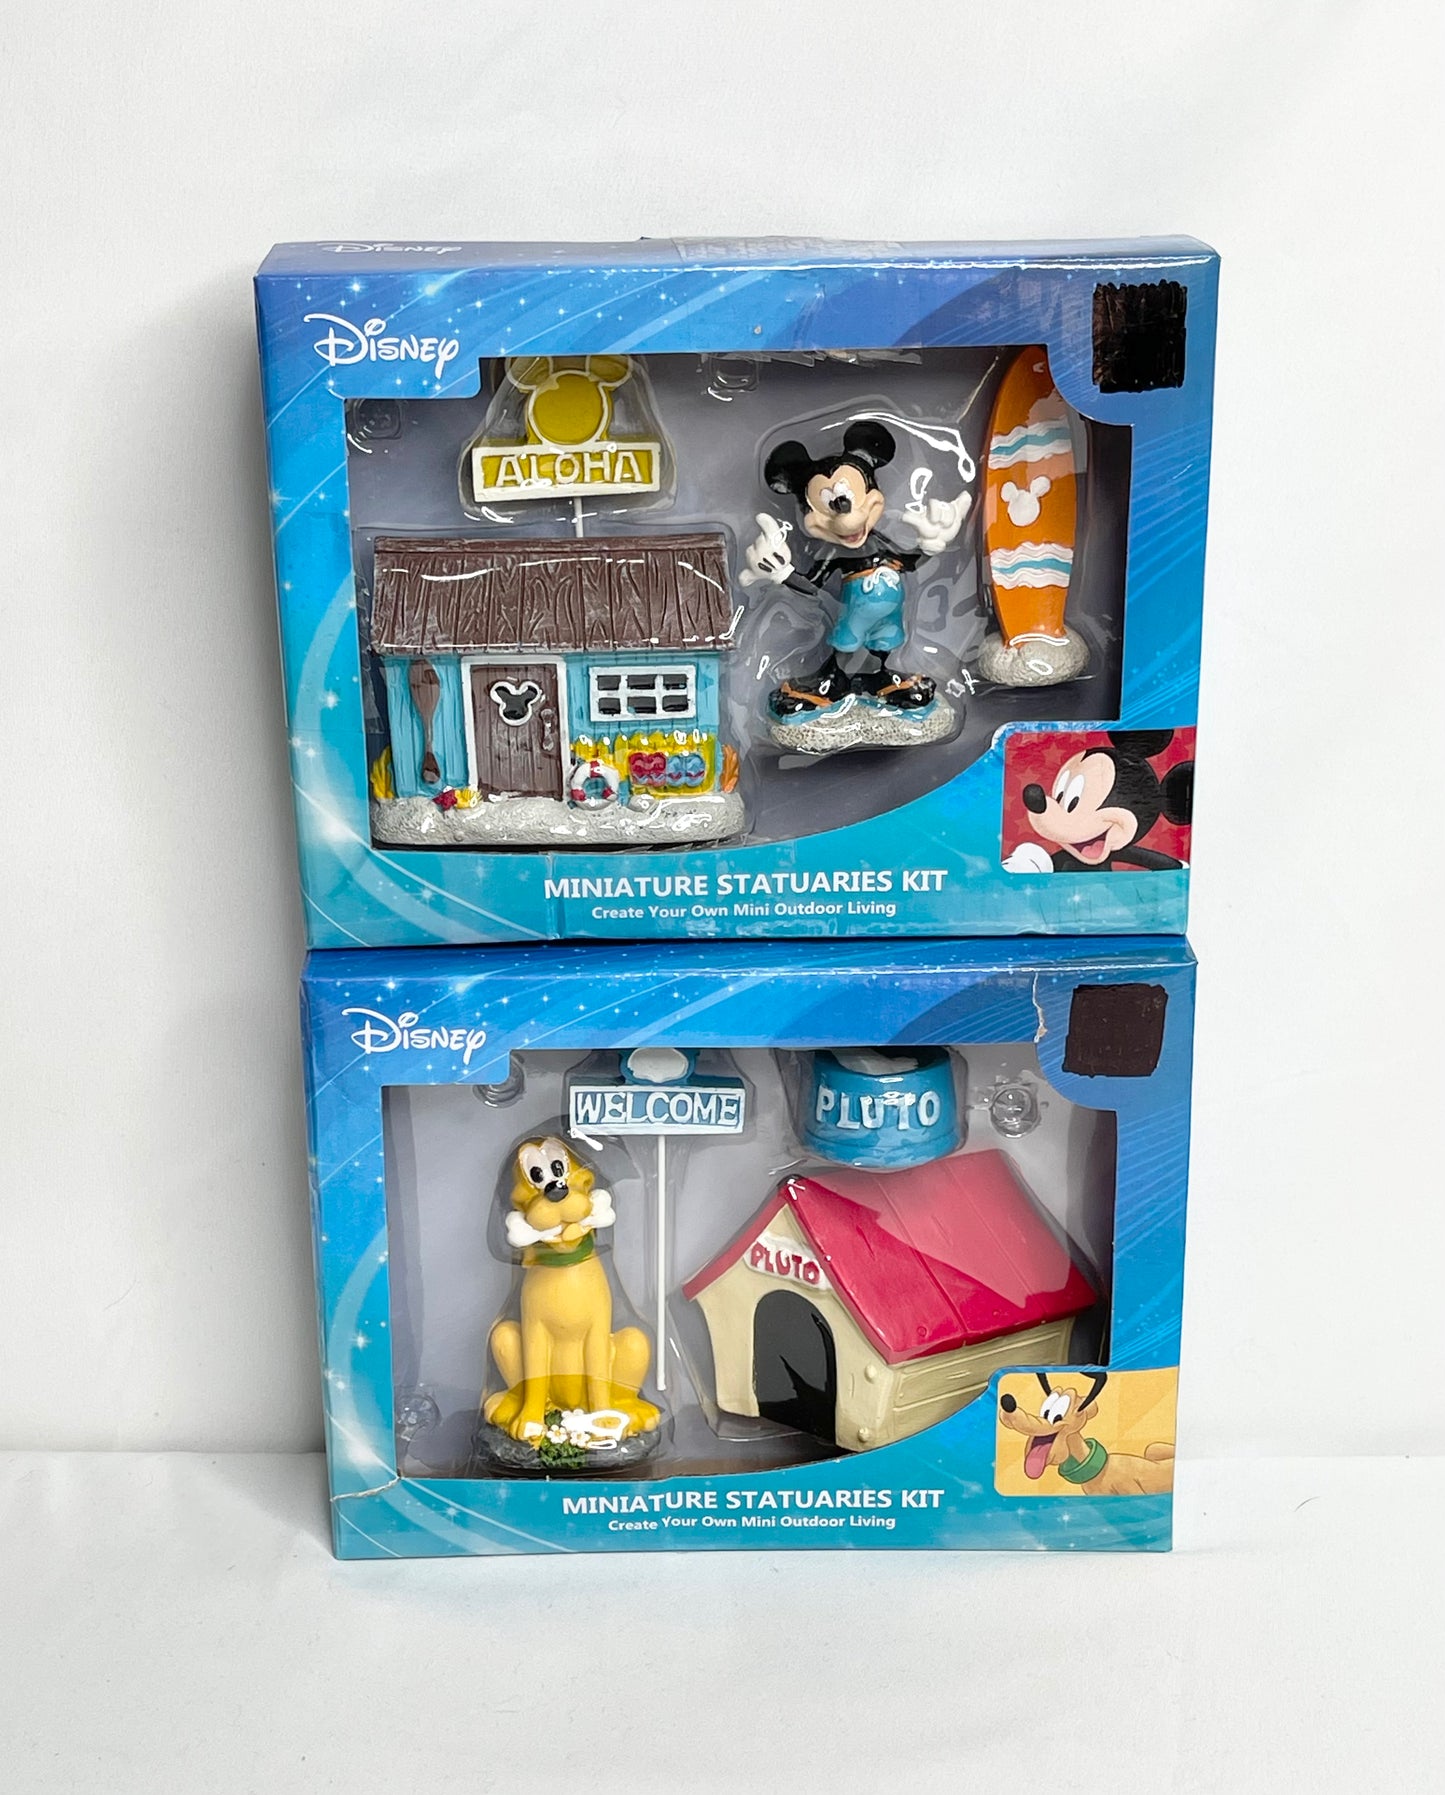 Disney Miniature Statuaries Kits (2 pack)